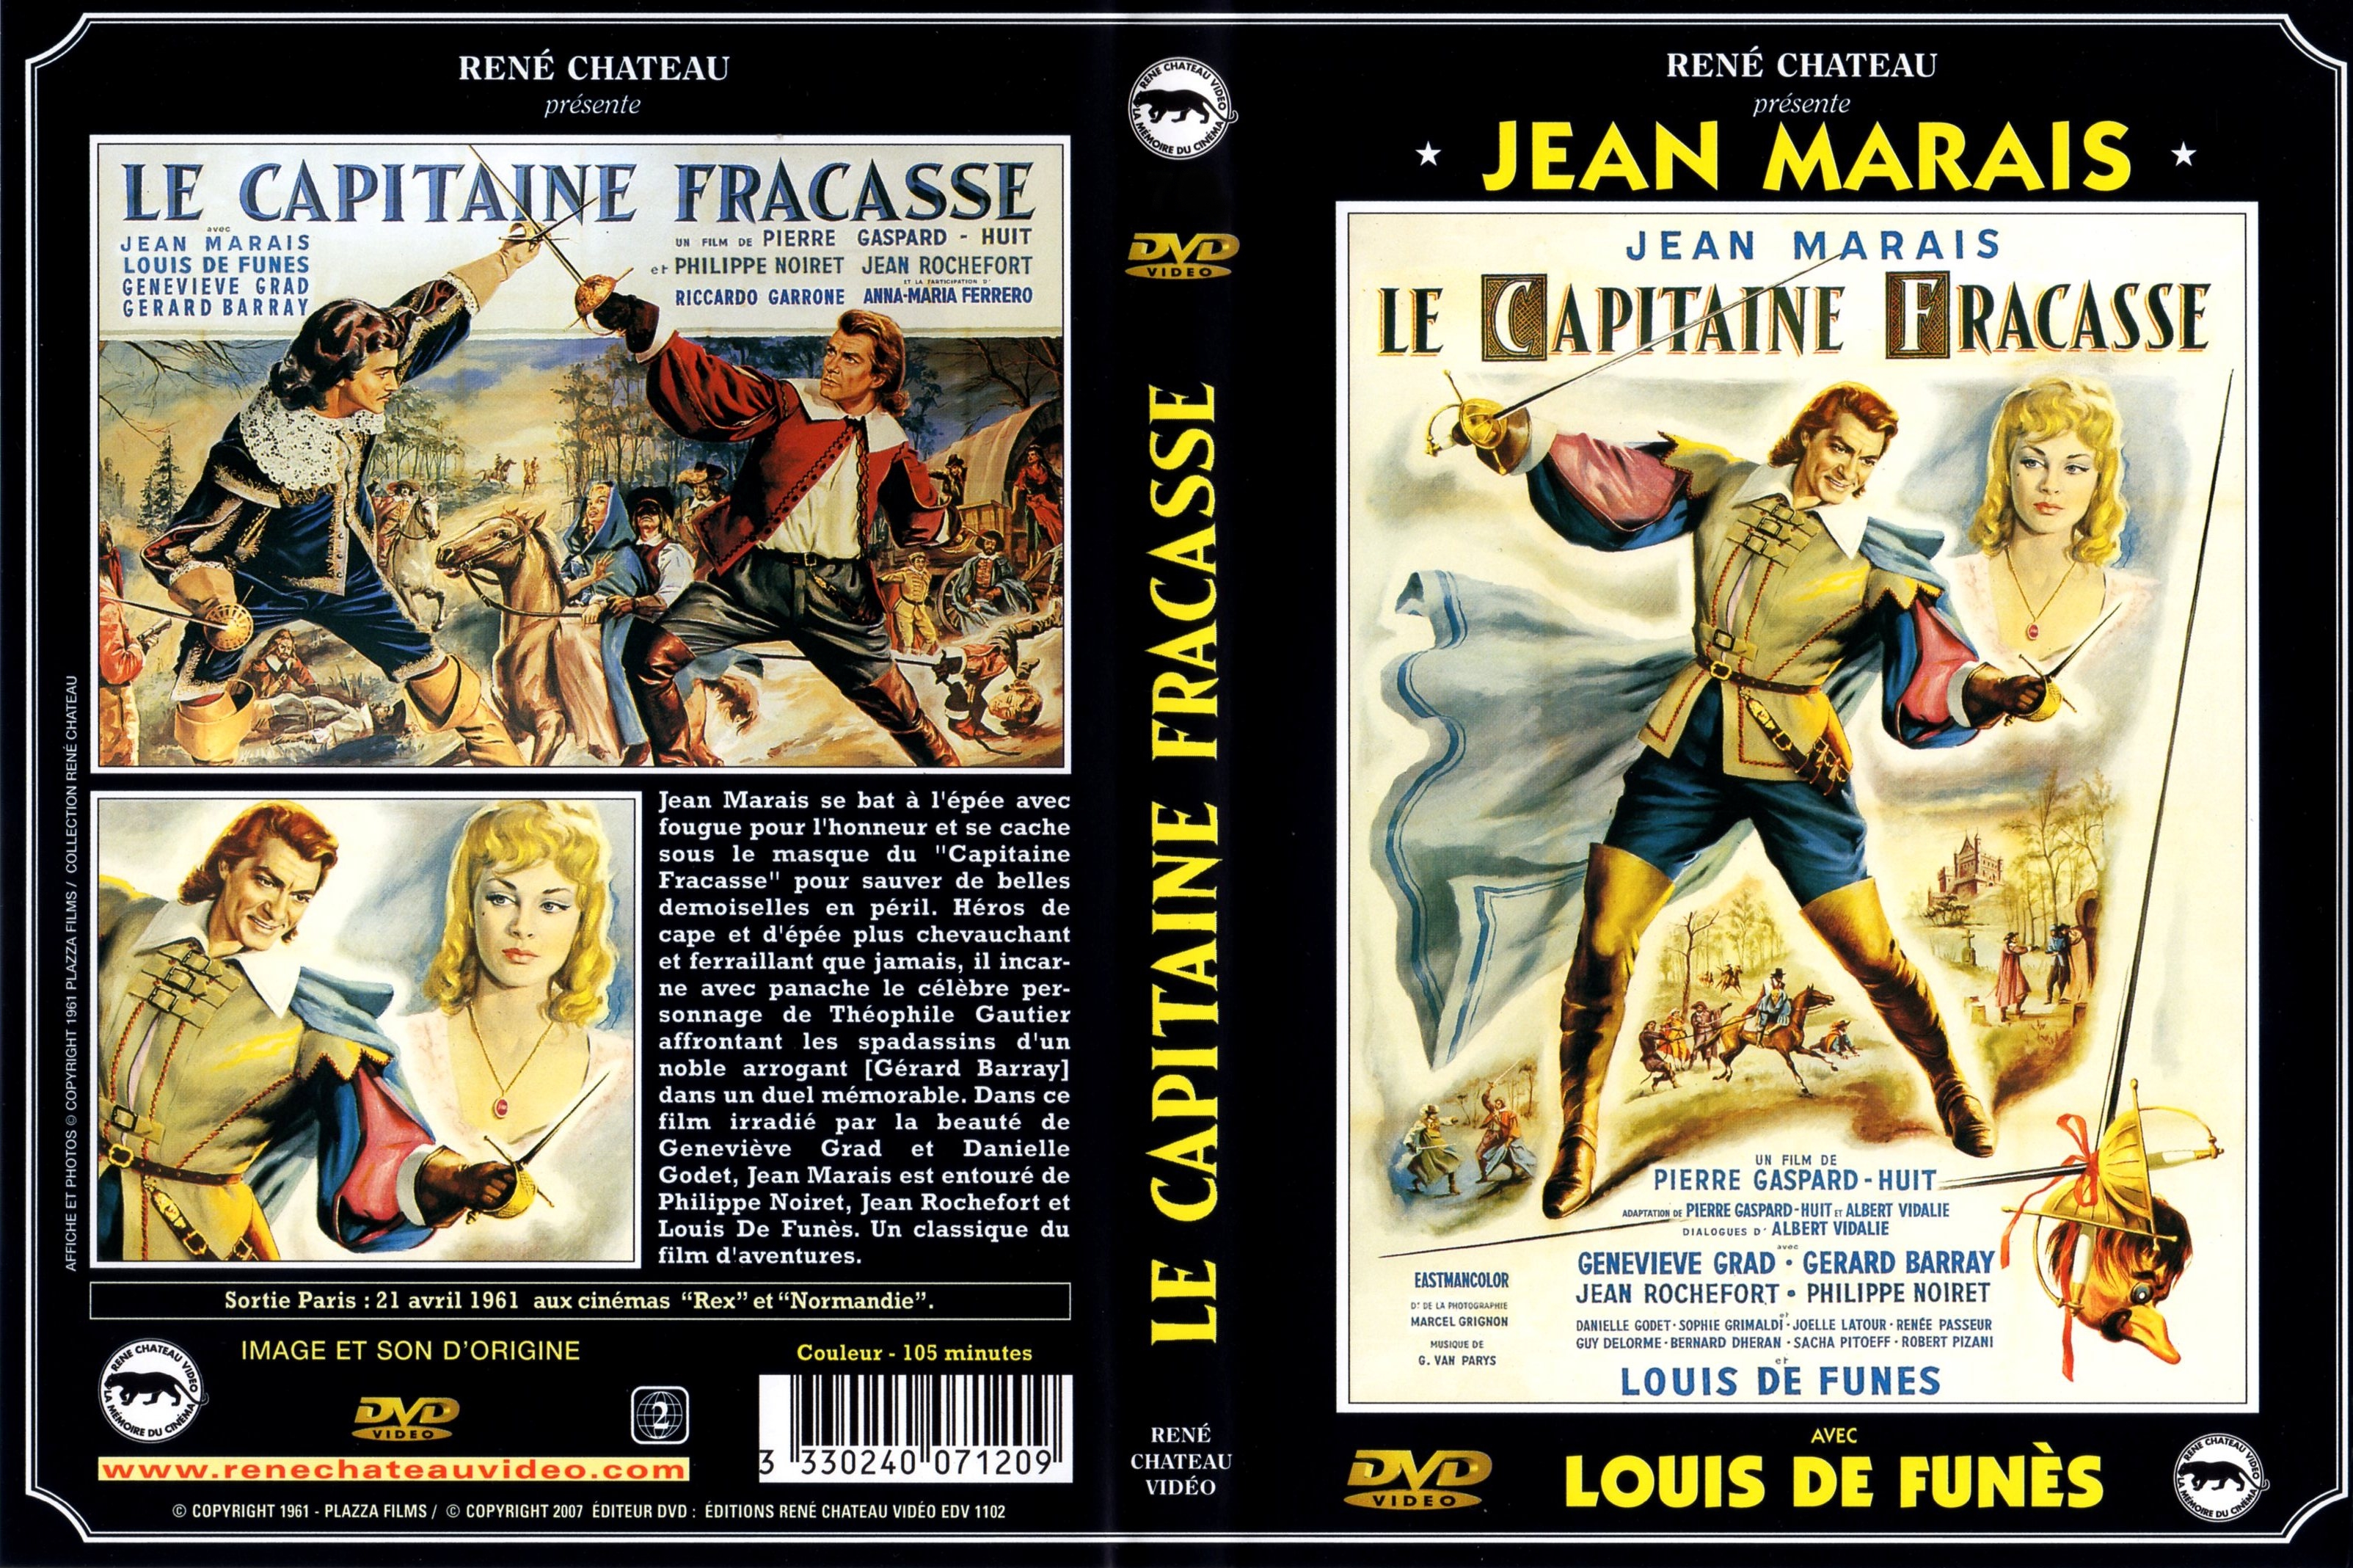 Jaquette DVD Le Capitaine Fracasse v4